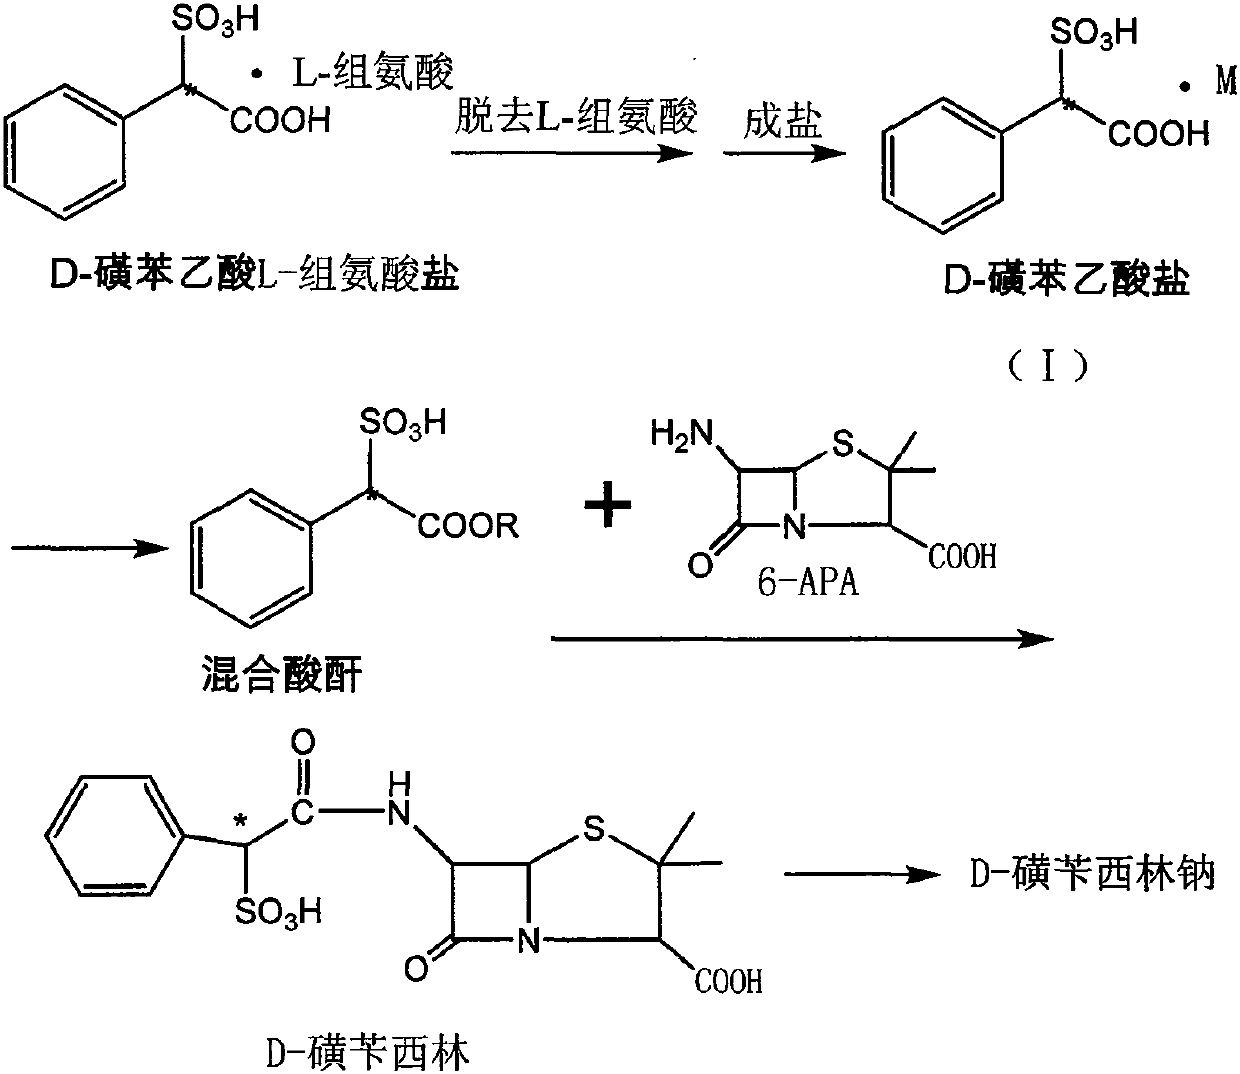 A kind of preparation method of d-sulbenicillin sodium